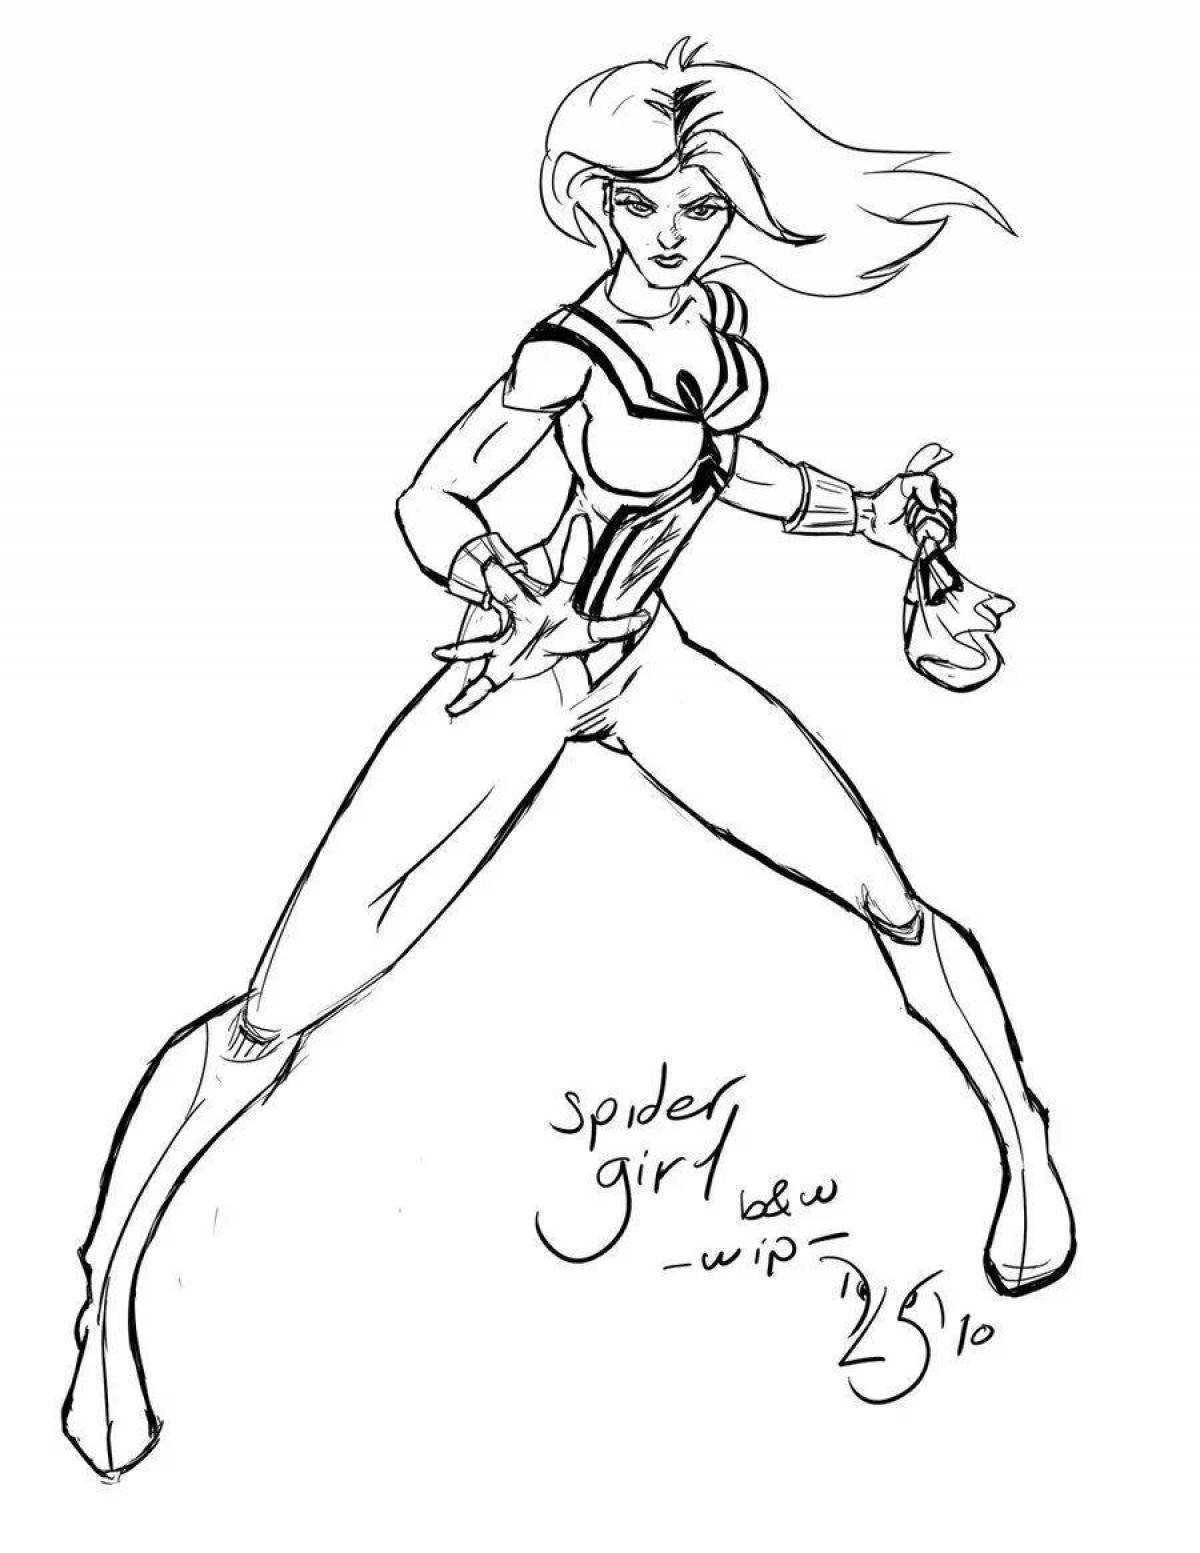 Spiderwoman #2